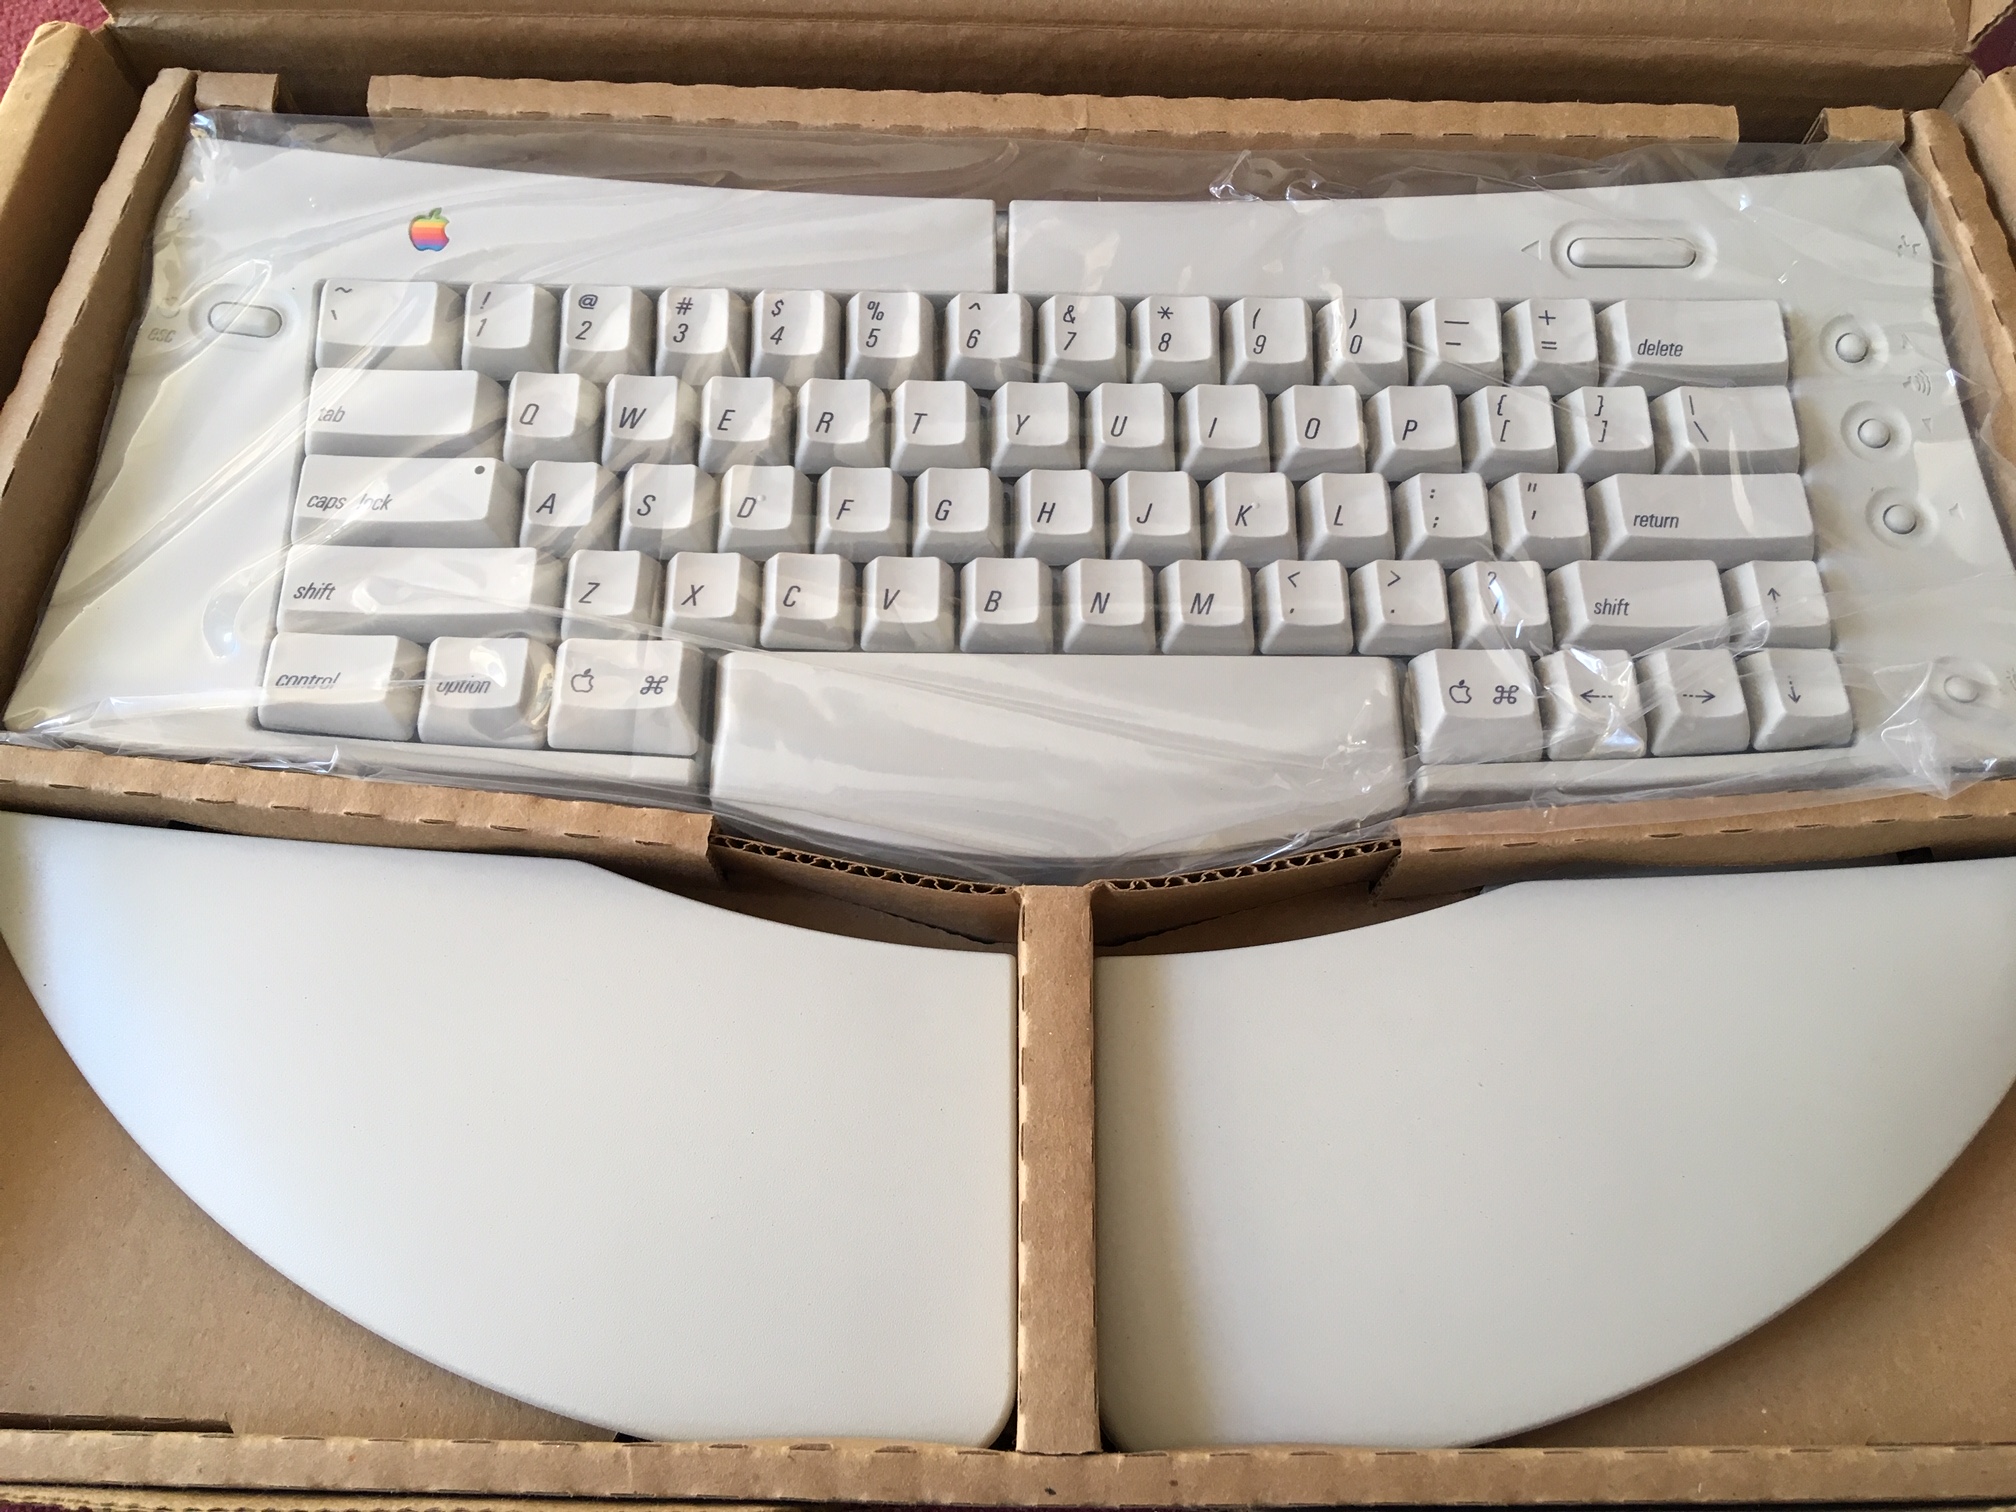 eBay Purchase #20 – Apple Adjustable Keyboard M1242 – Socket 3